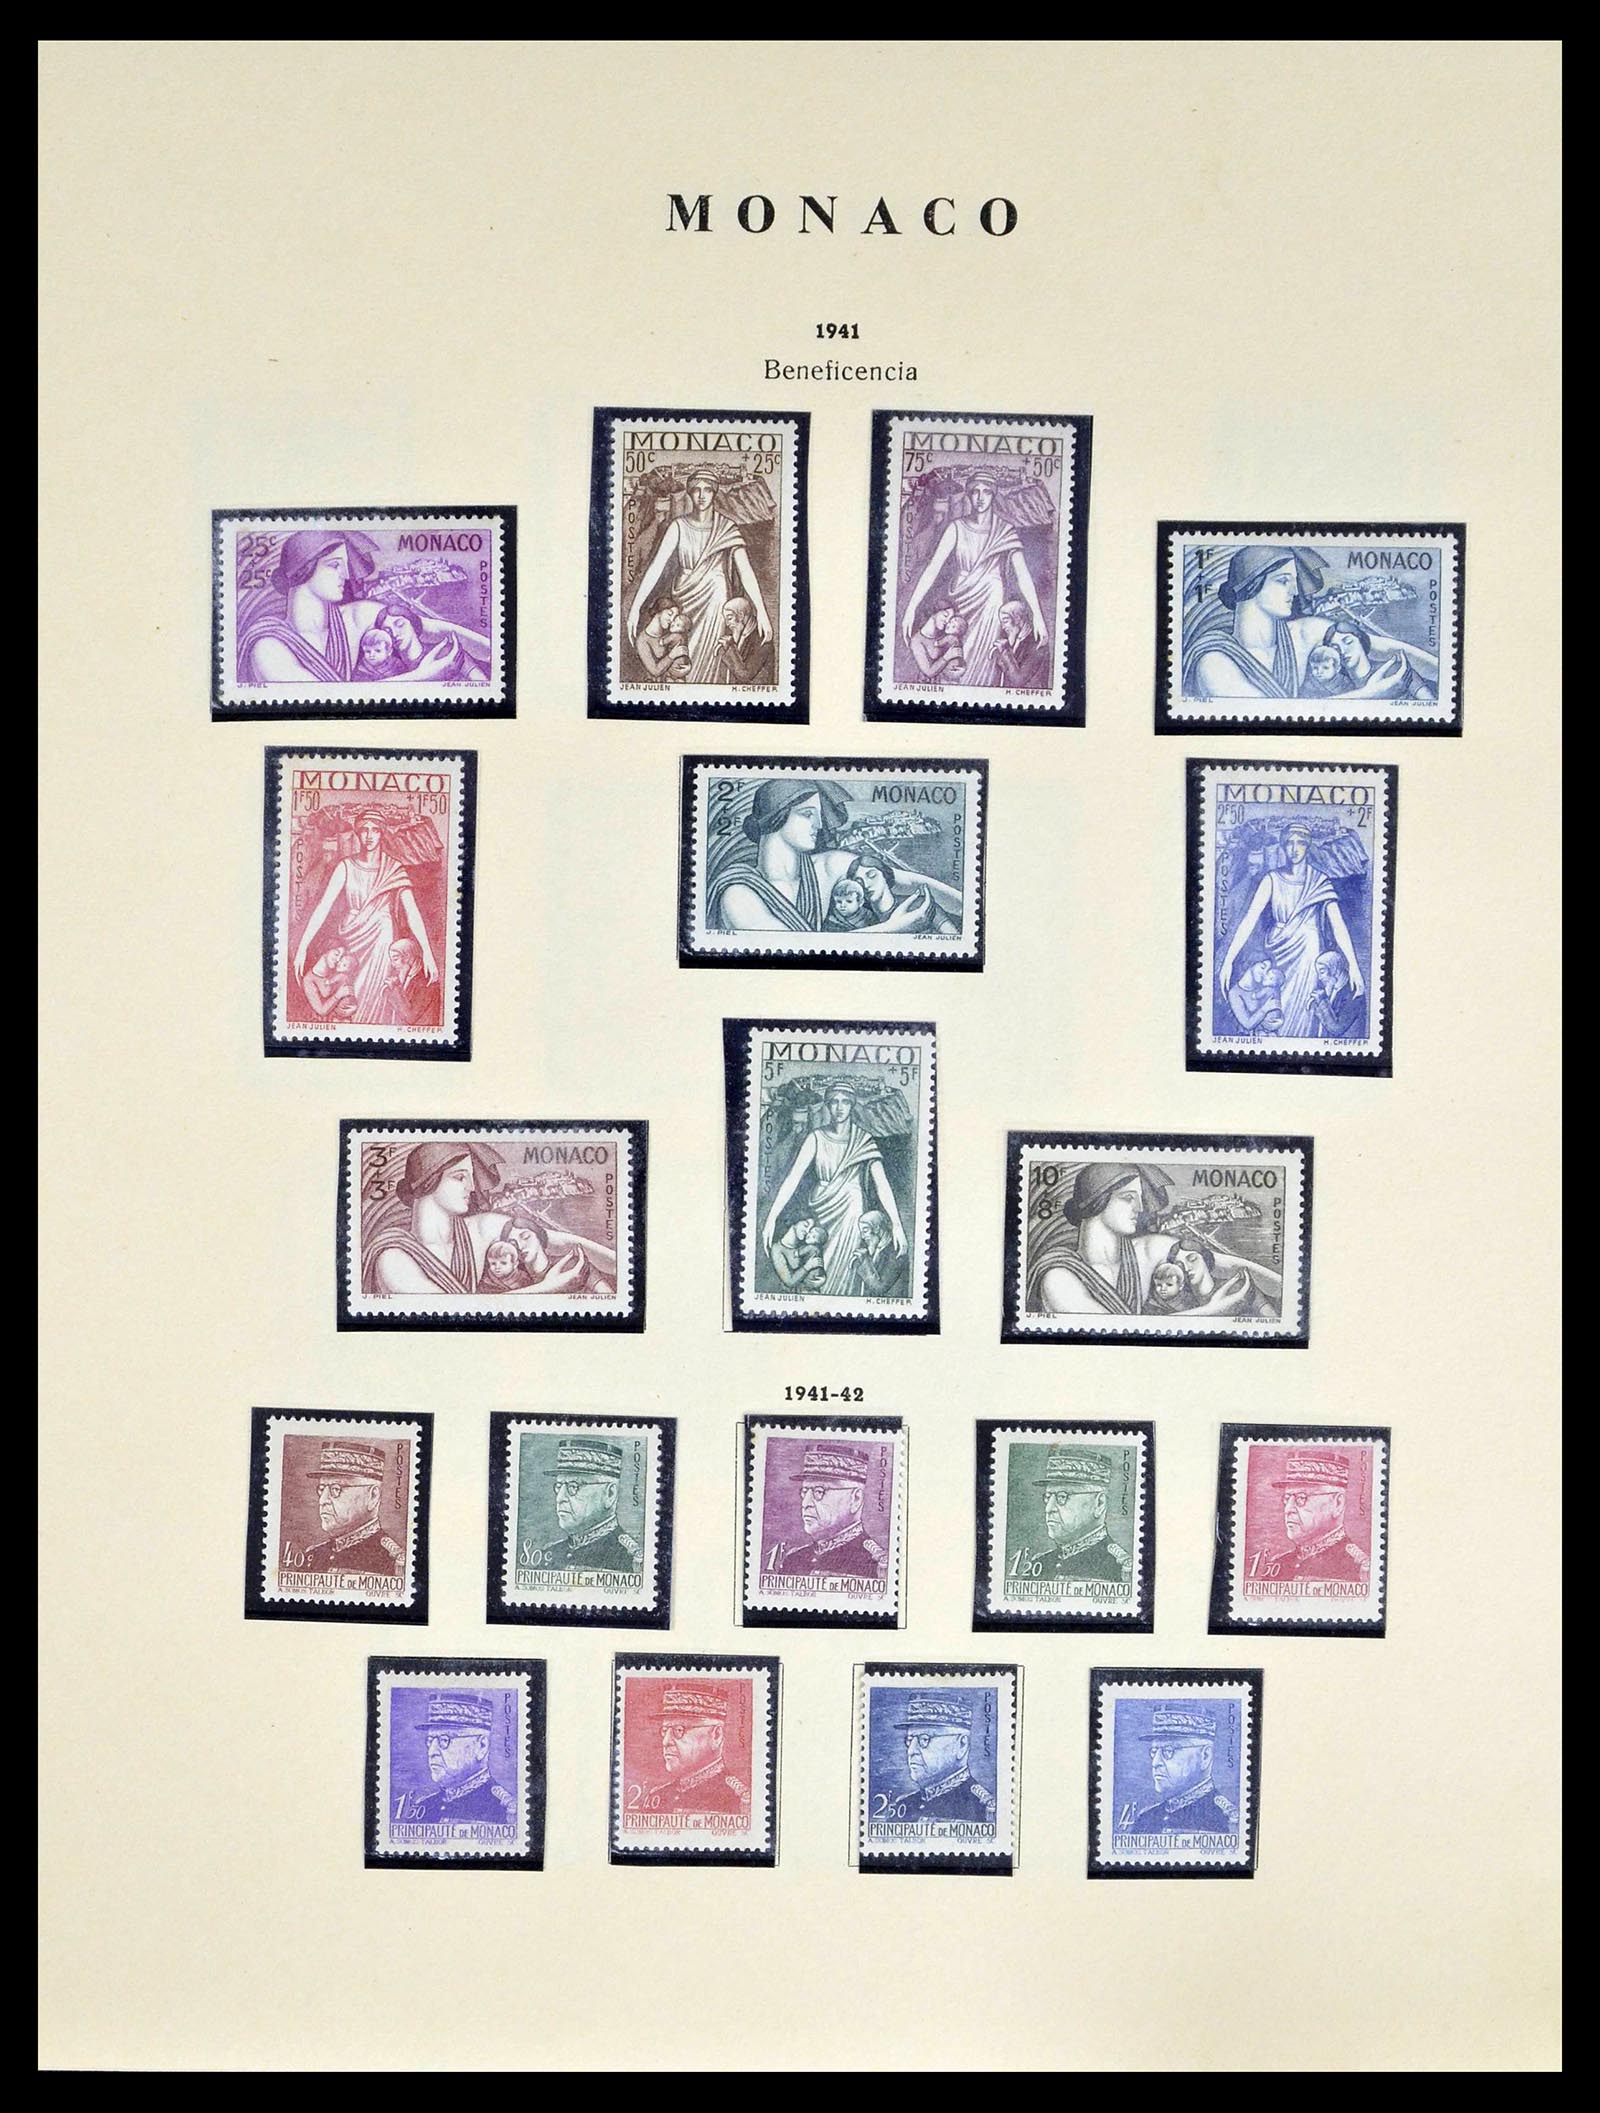 39082 0012 - Stamp collection 39082 Monaco 1885-1964.